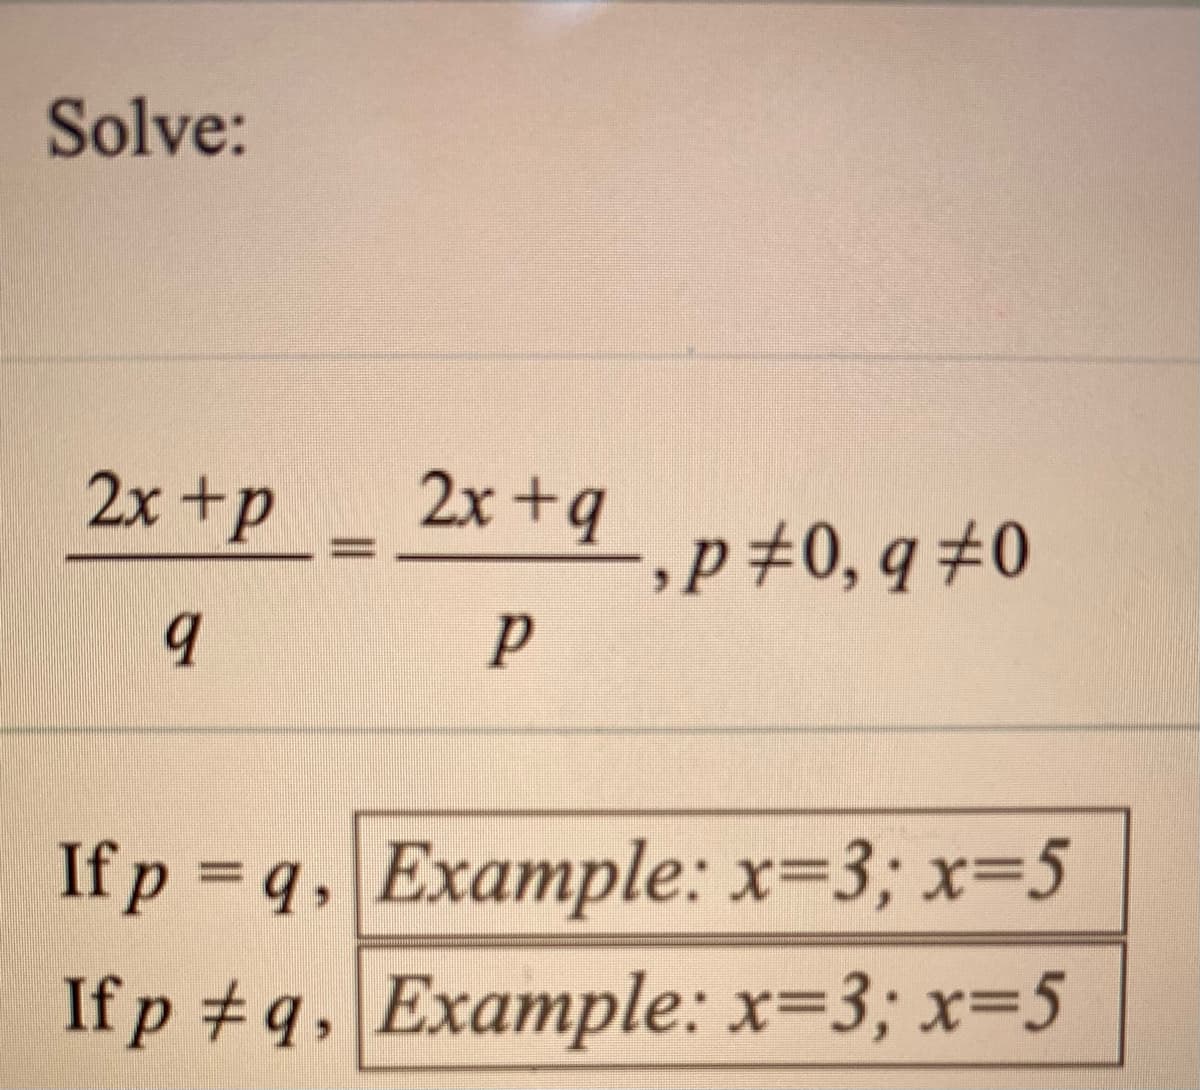 Solve:
2x +p_ 2x+ą
,p#0, q #0
If p q, Example: x=3; x=5
If p #q, Example: x=3; x=5
